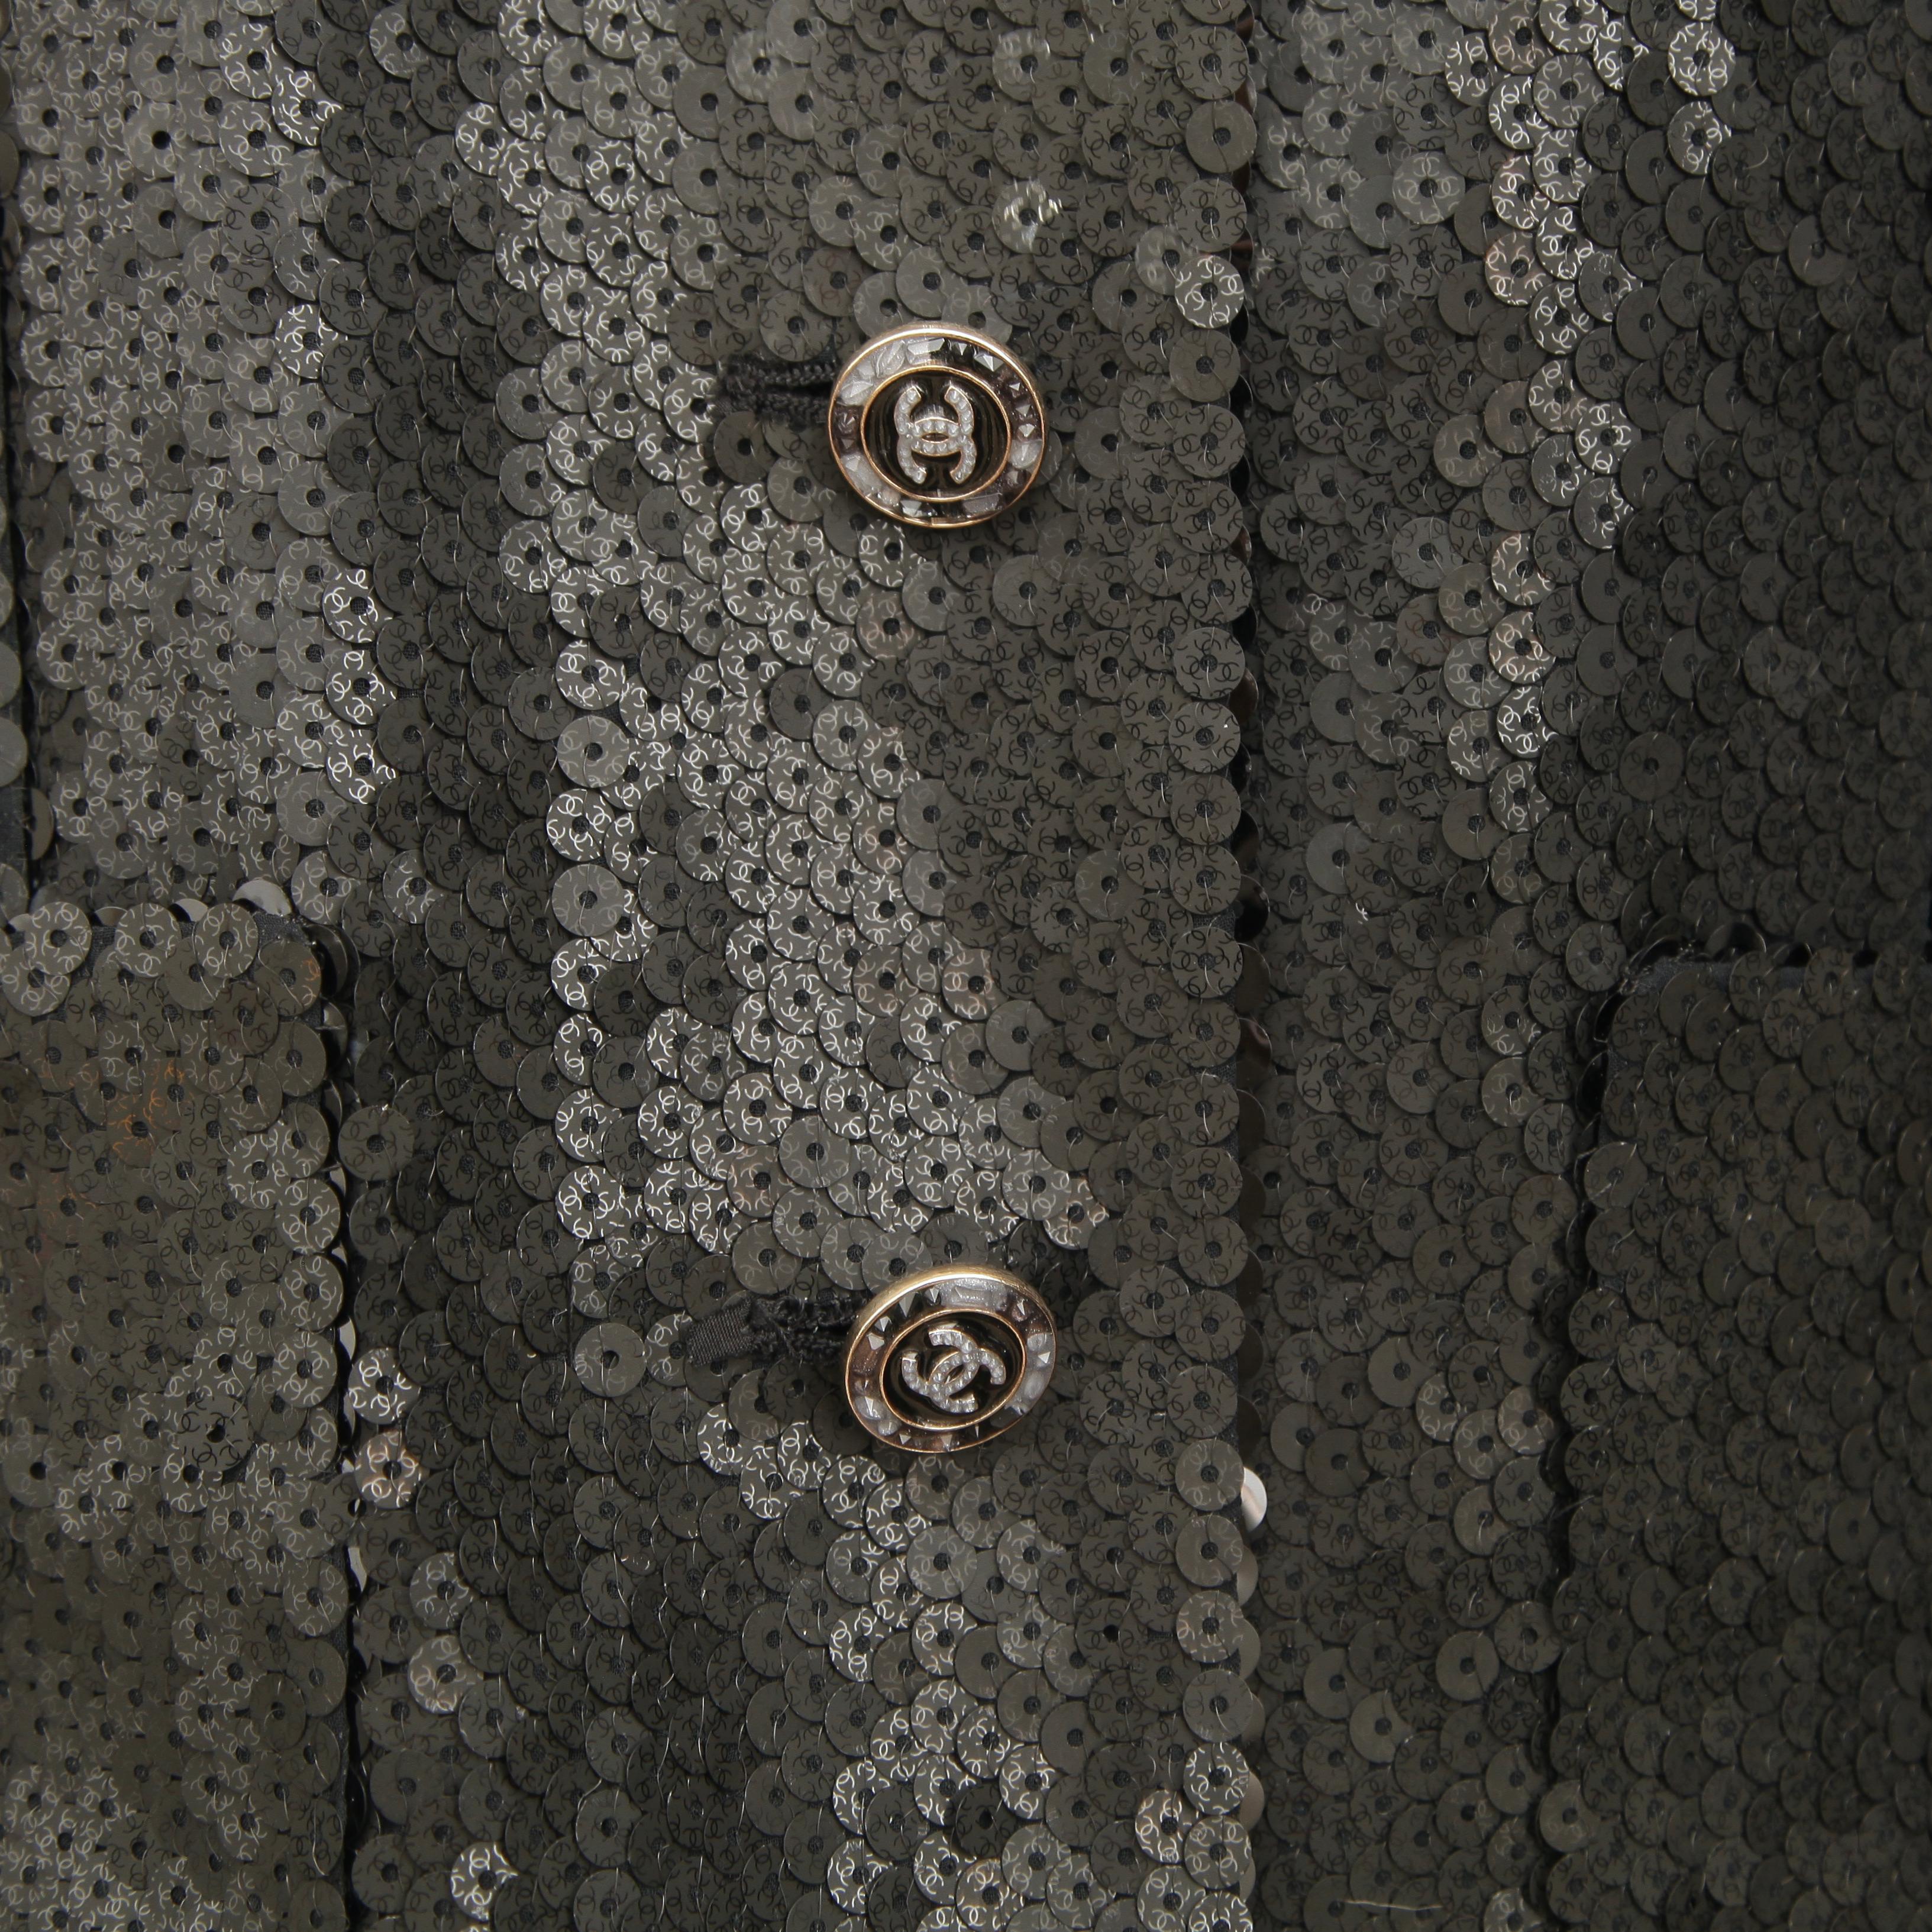 CHANEL Black Sequin Jacket CRUISE 2023 Paillette Long Sleeve Sz 38 $8800 NWT 2